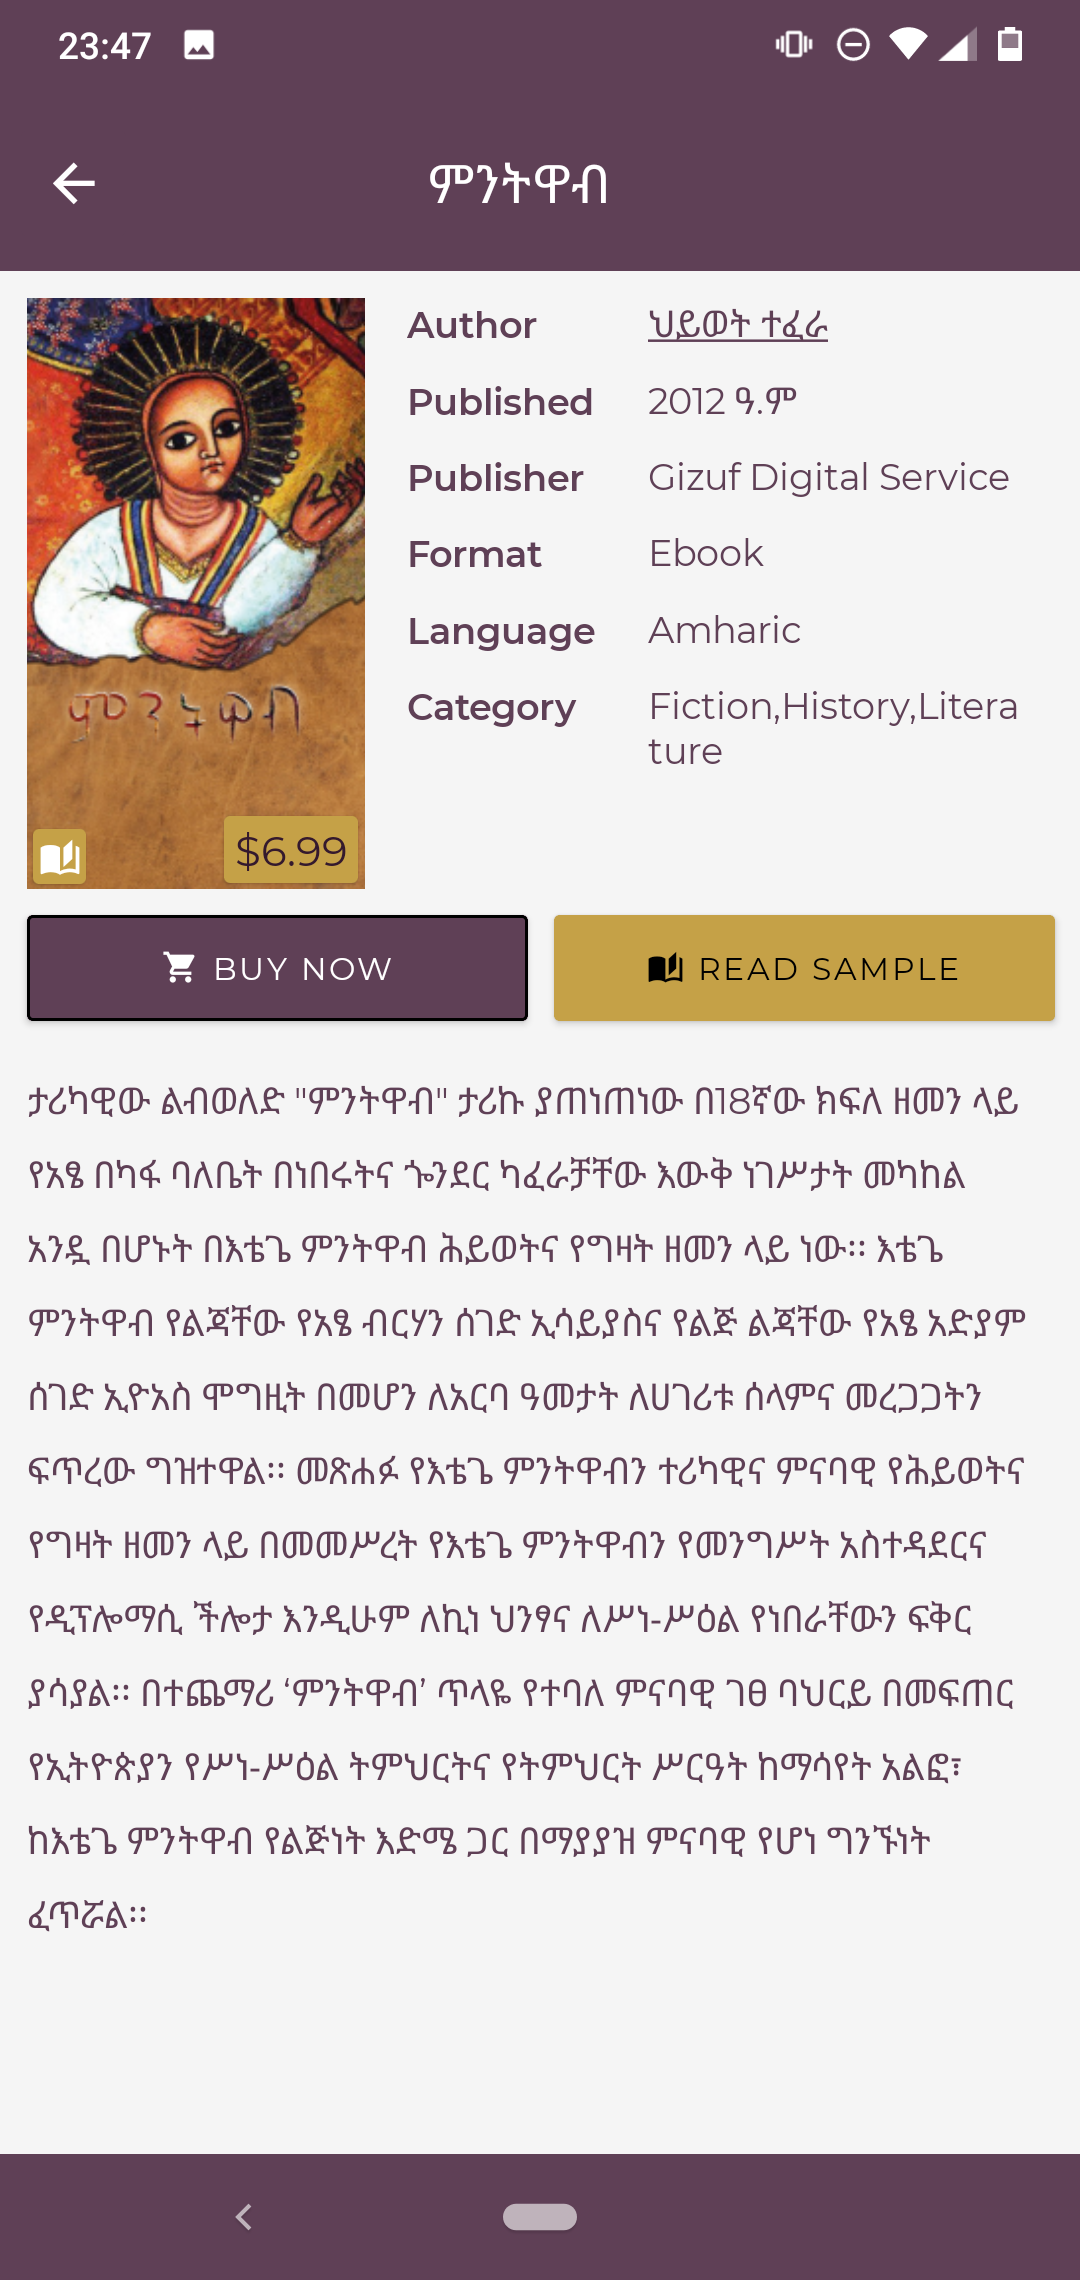 AfroRead-Etiopian-book-reading-app-book-detail-view